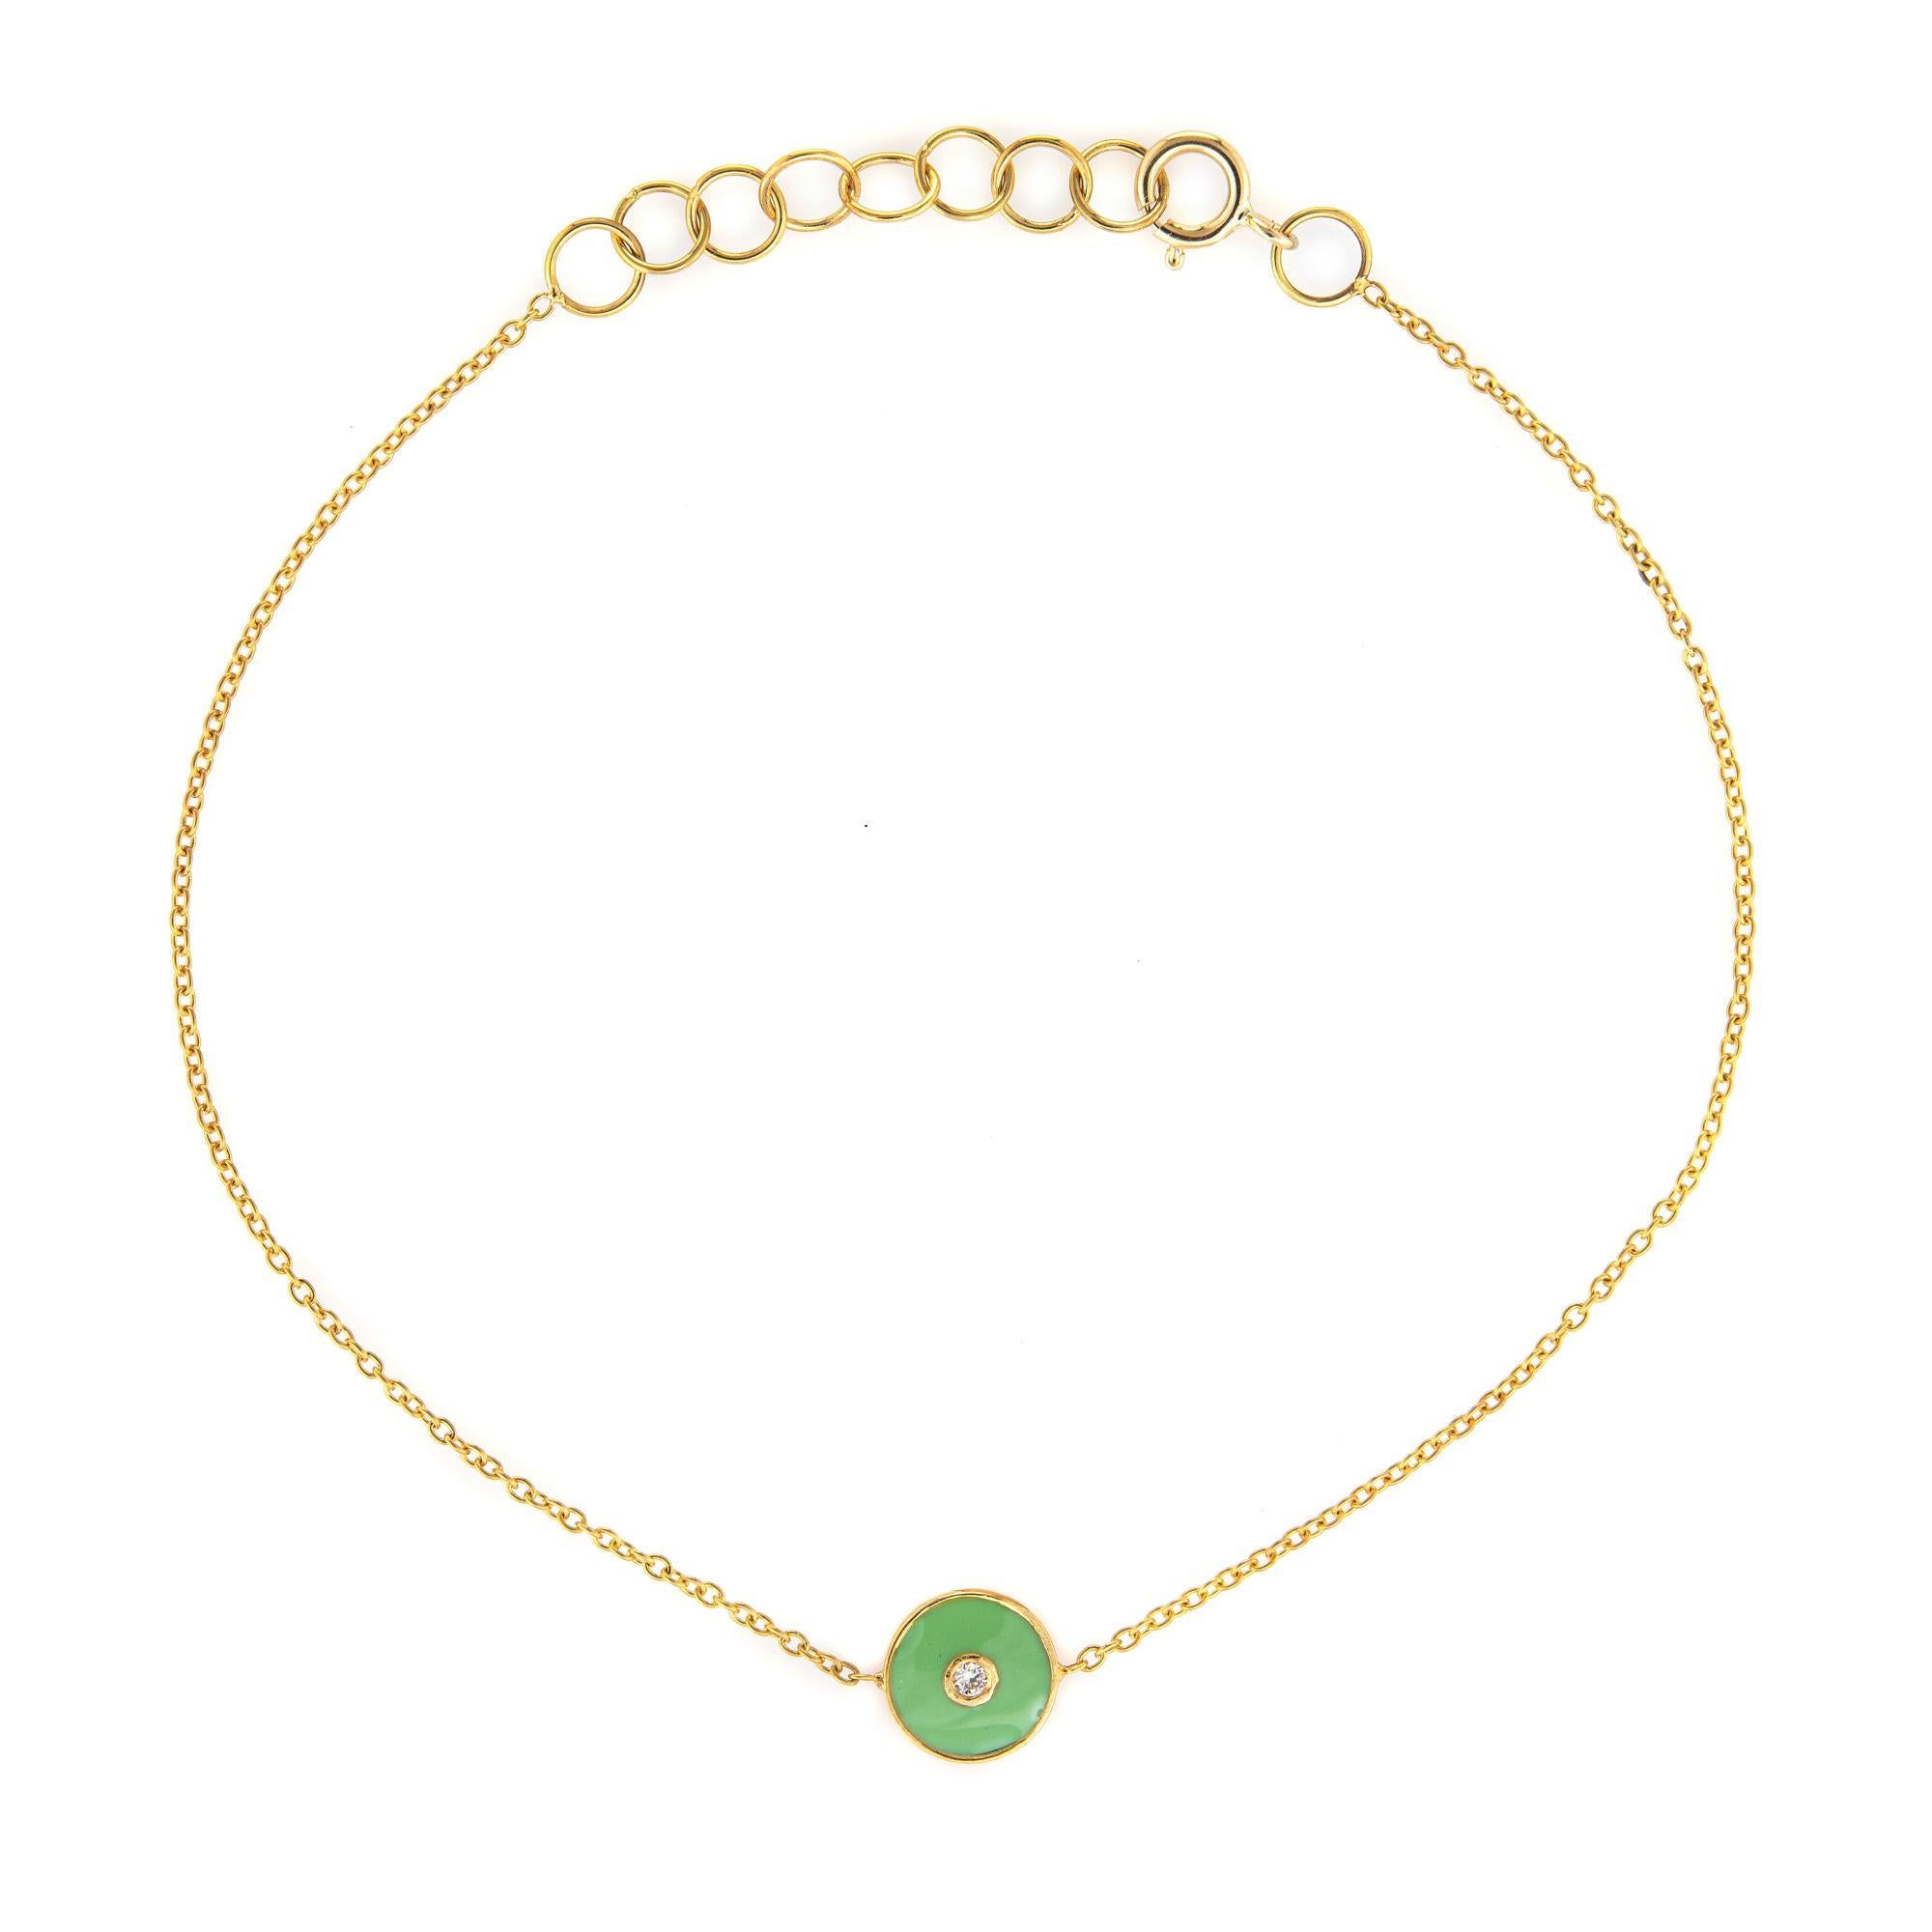 Contemporary Green Enamel Diamond Bracelet 14k Yellow Gold Adjustable Length For Sale